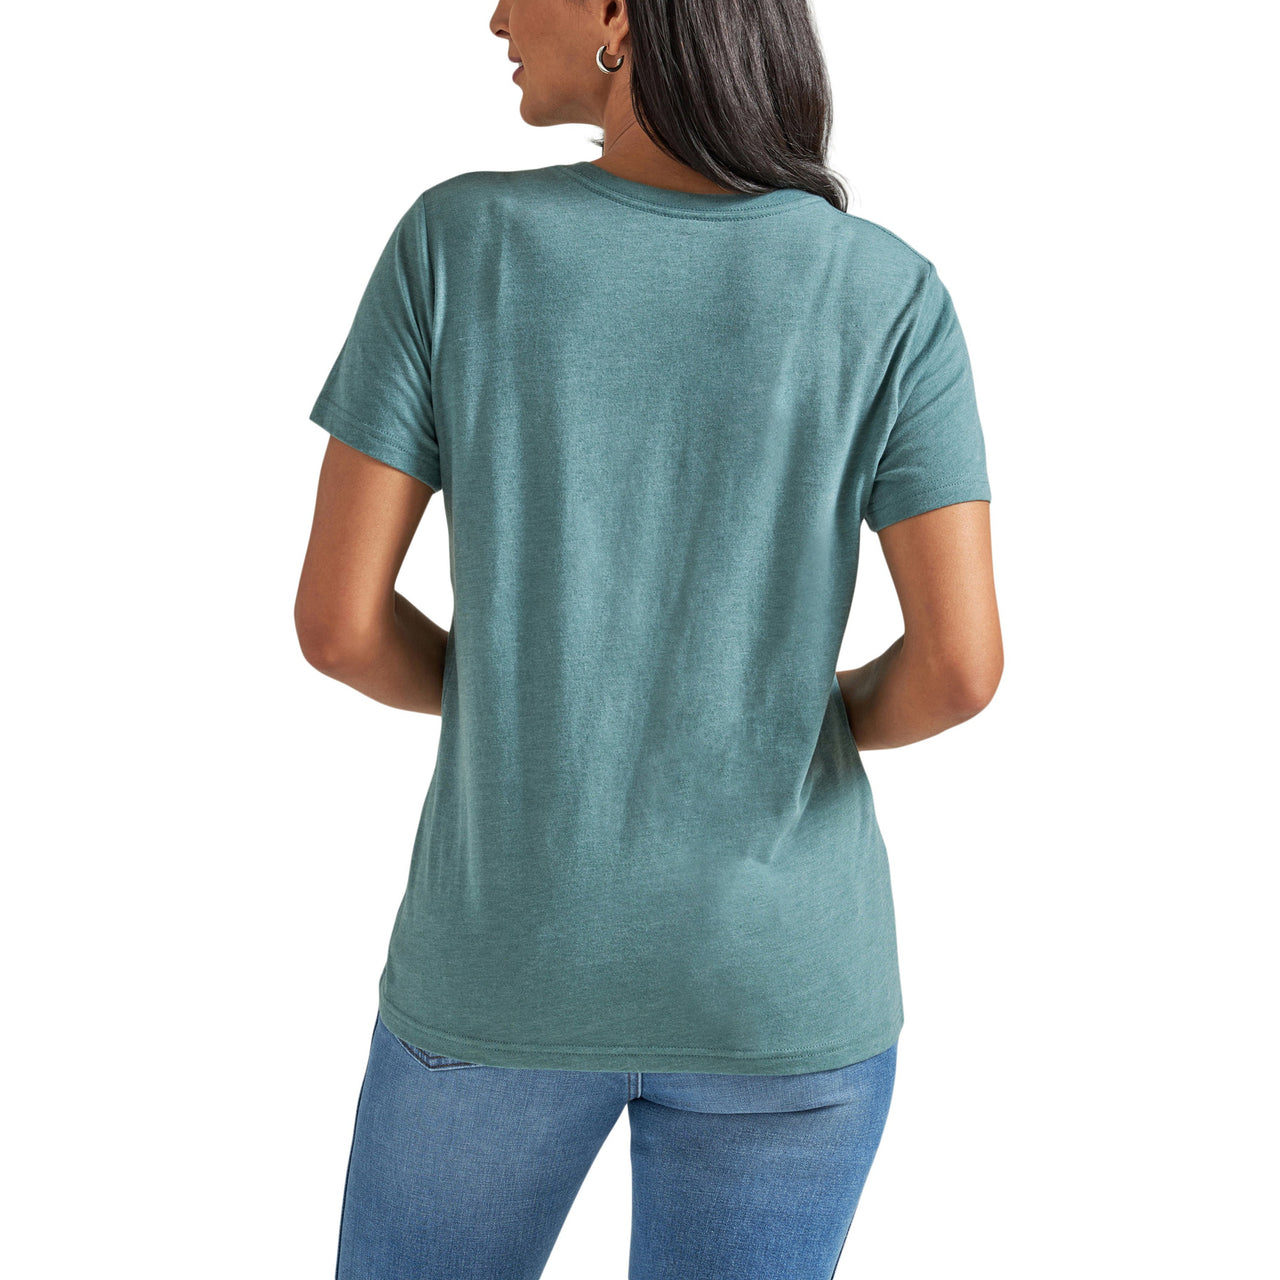 Wrangler Women's Retro Regular Fit Graphic T-Shirt - Teal